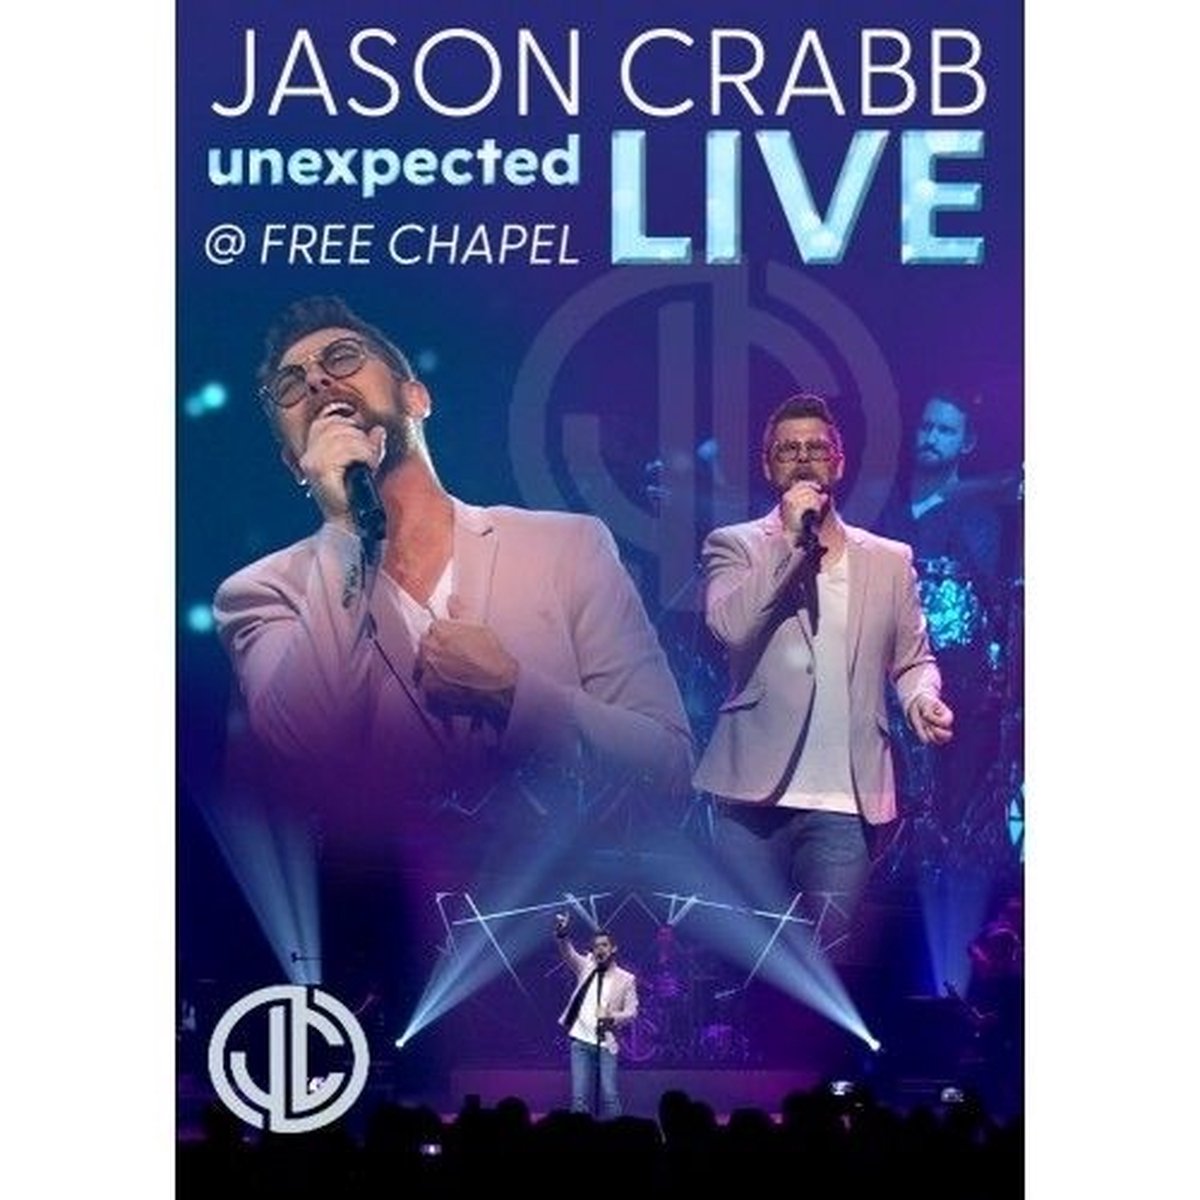 Jason Crabb - Unexpected (Live) (DVD)